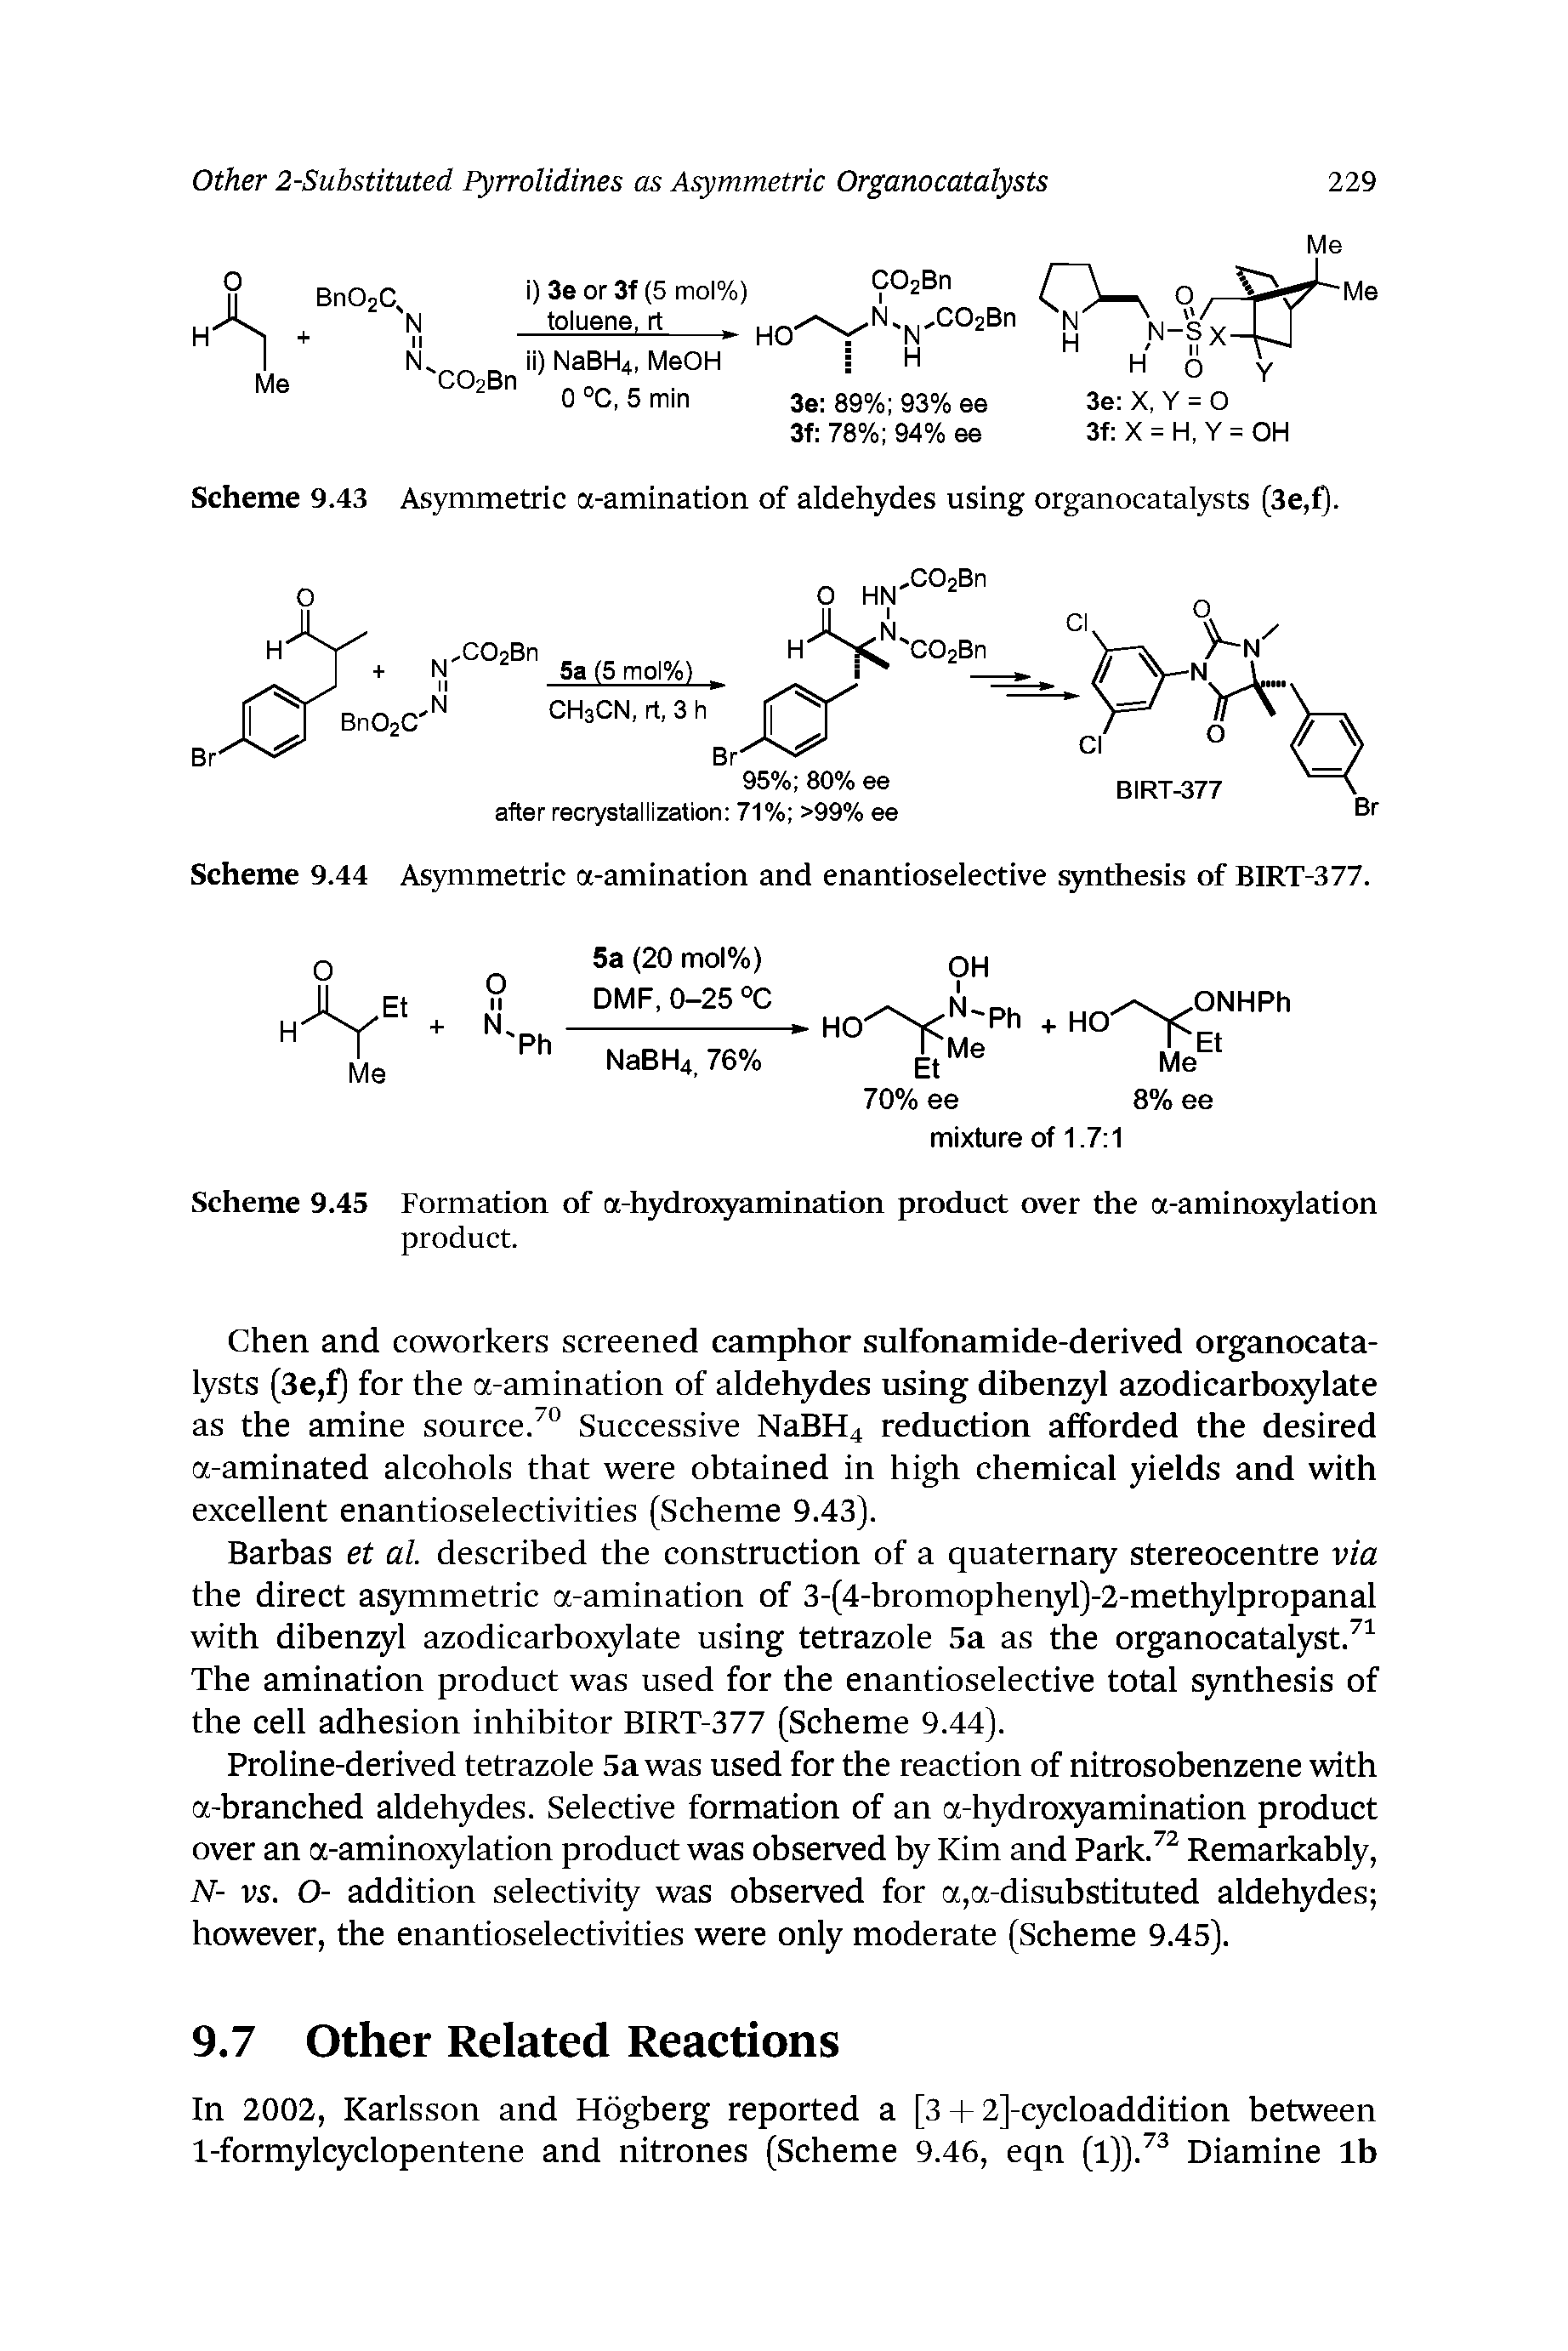 Scheme 9.43 Asymmetric a-amination of aldehydes using organocatalysts (3e,f).